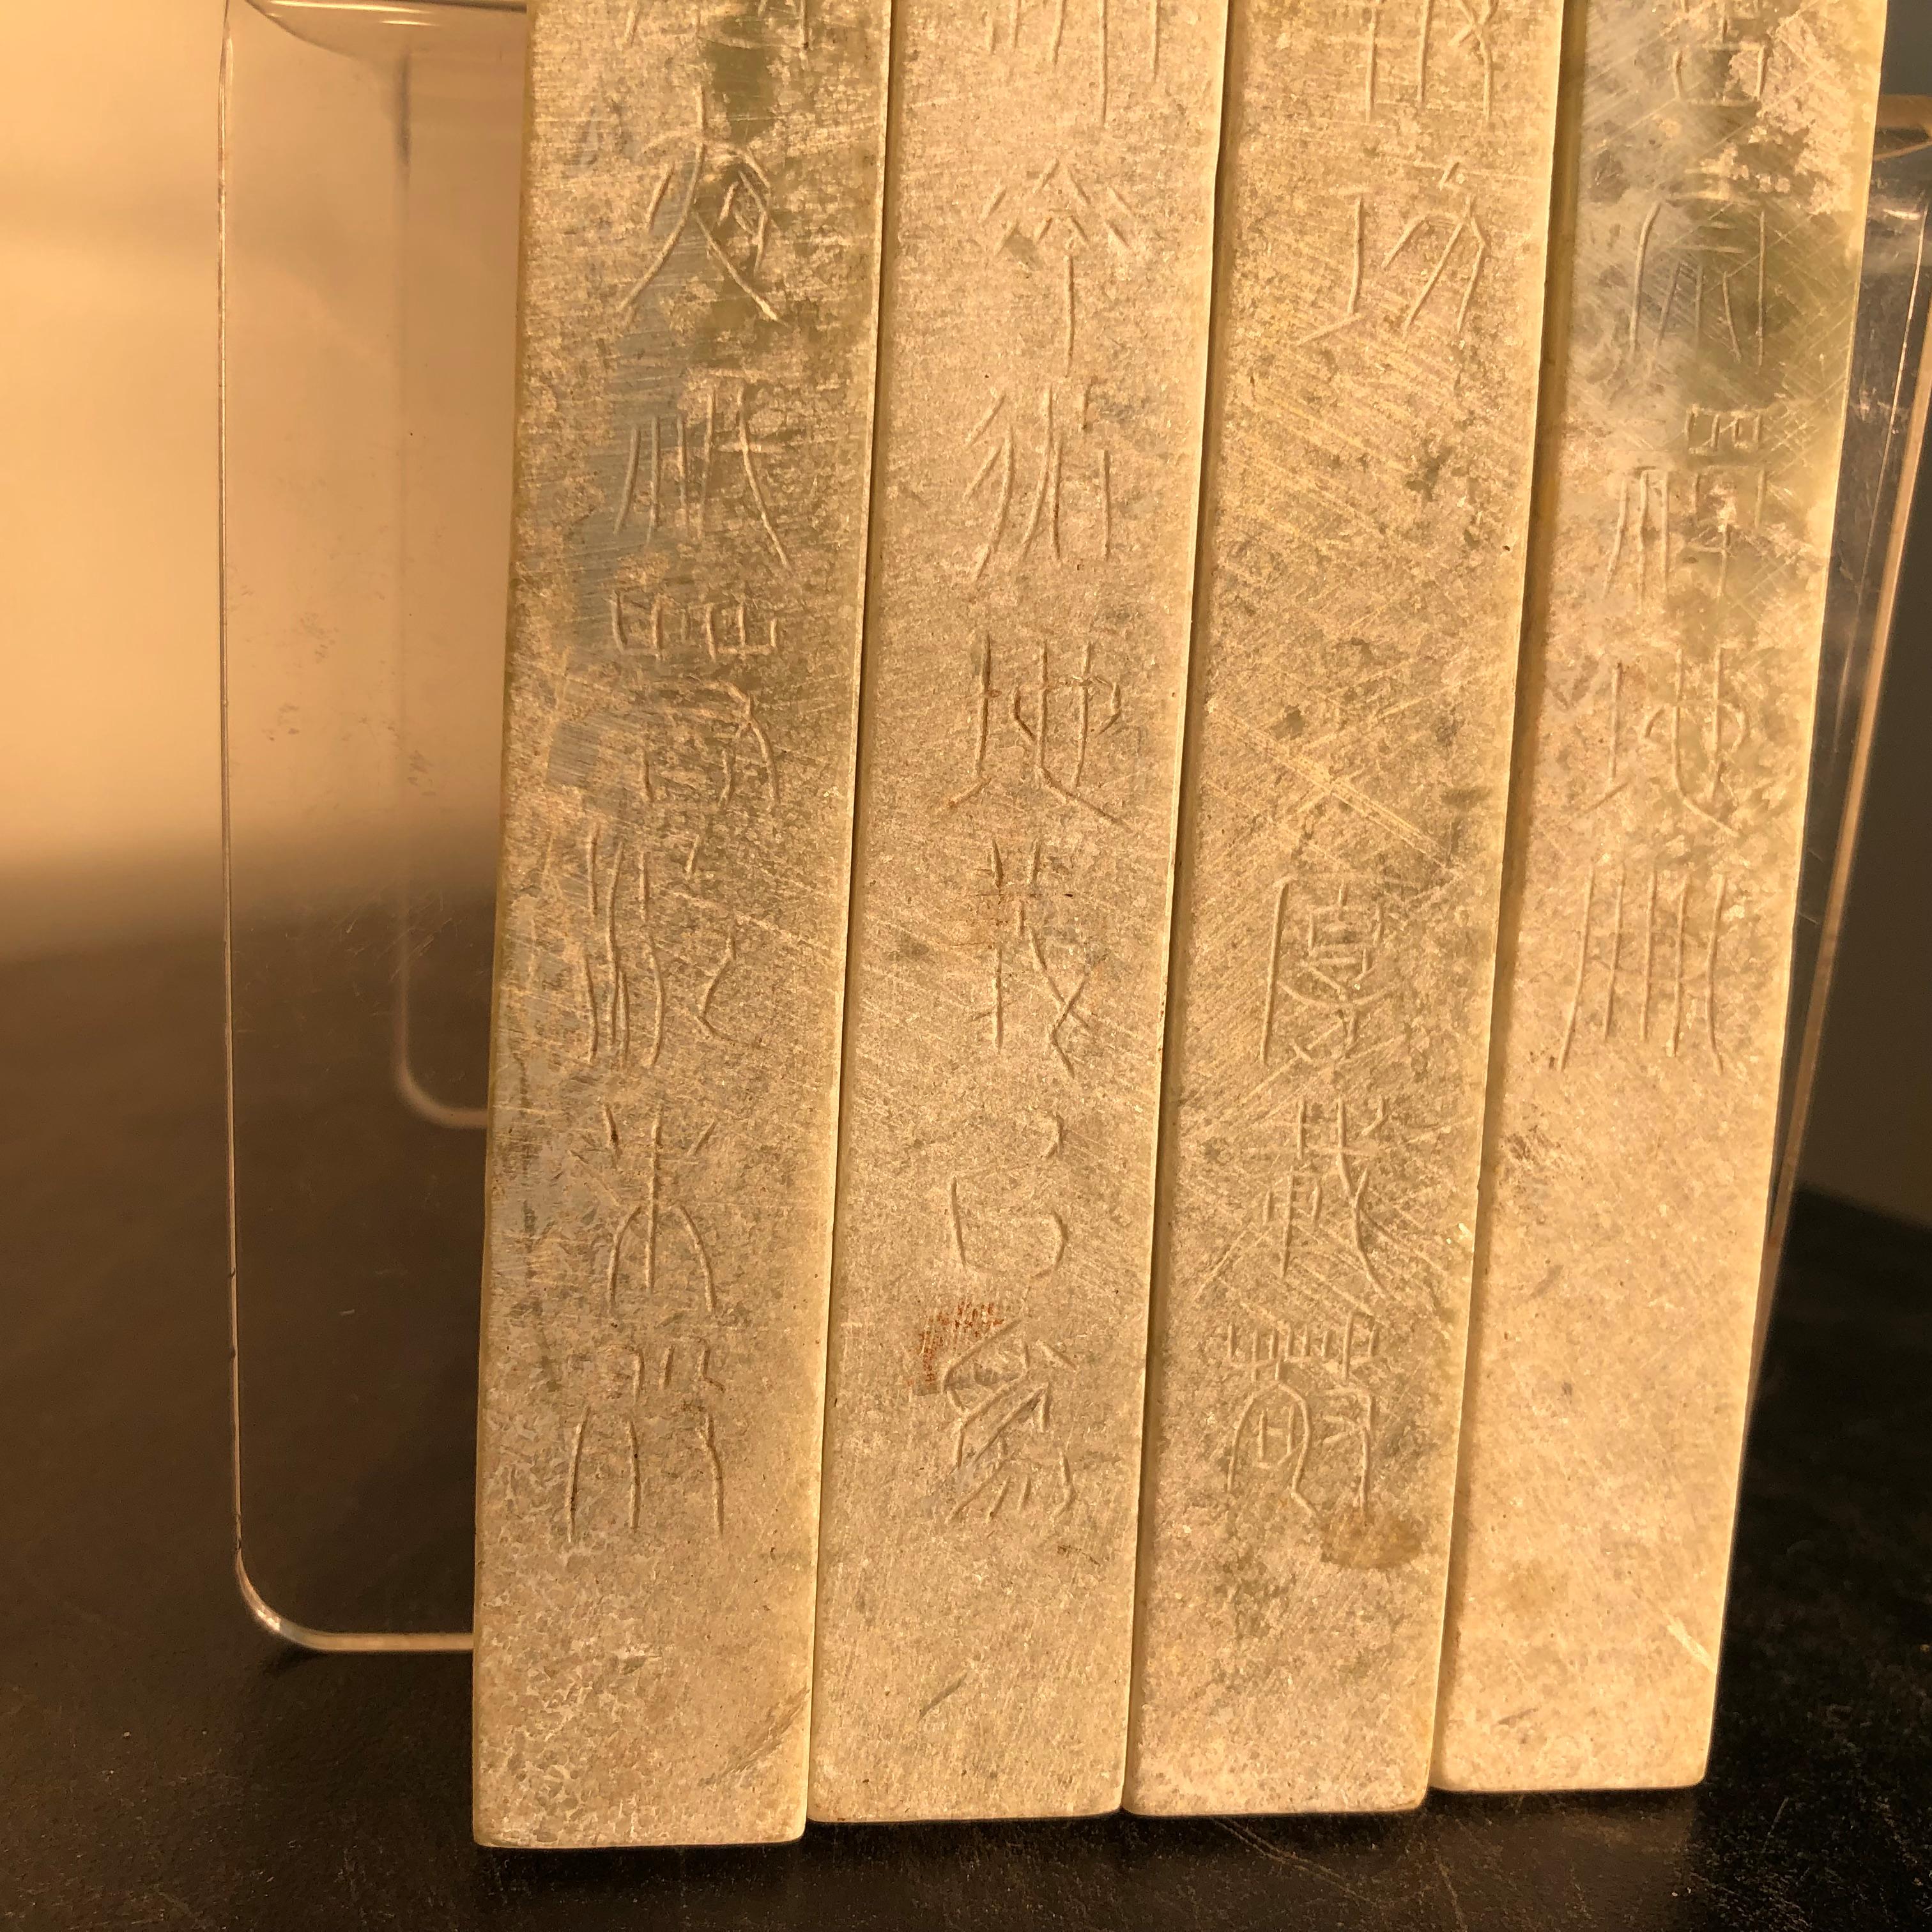 China Ancient Jade Set Four Engraved Tablets, 475-221 BC 5